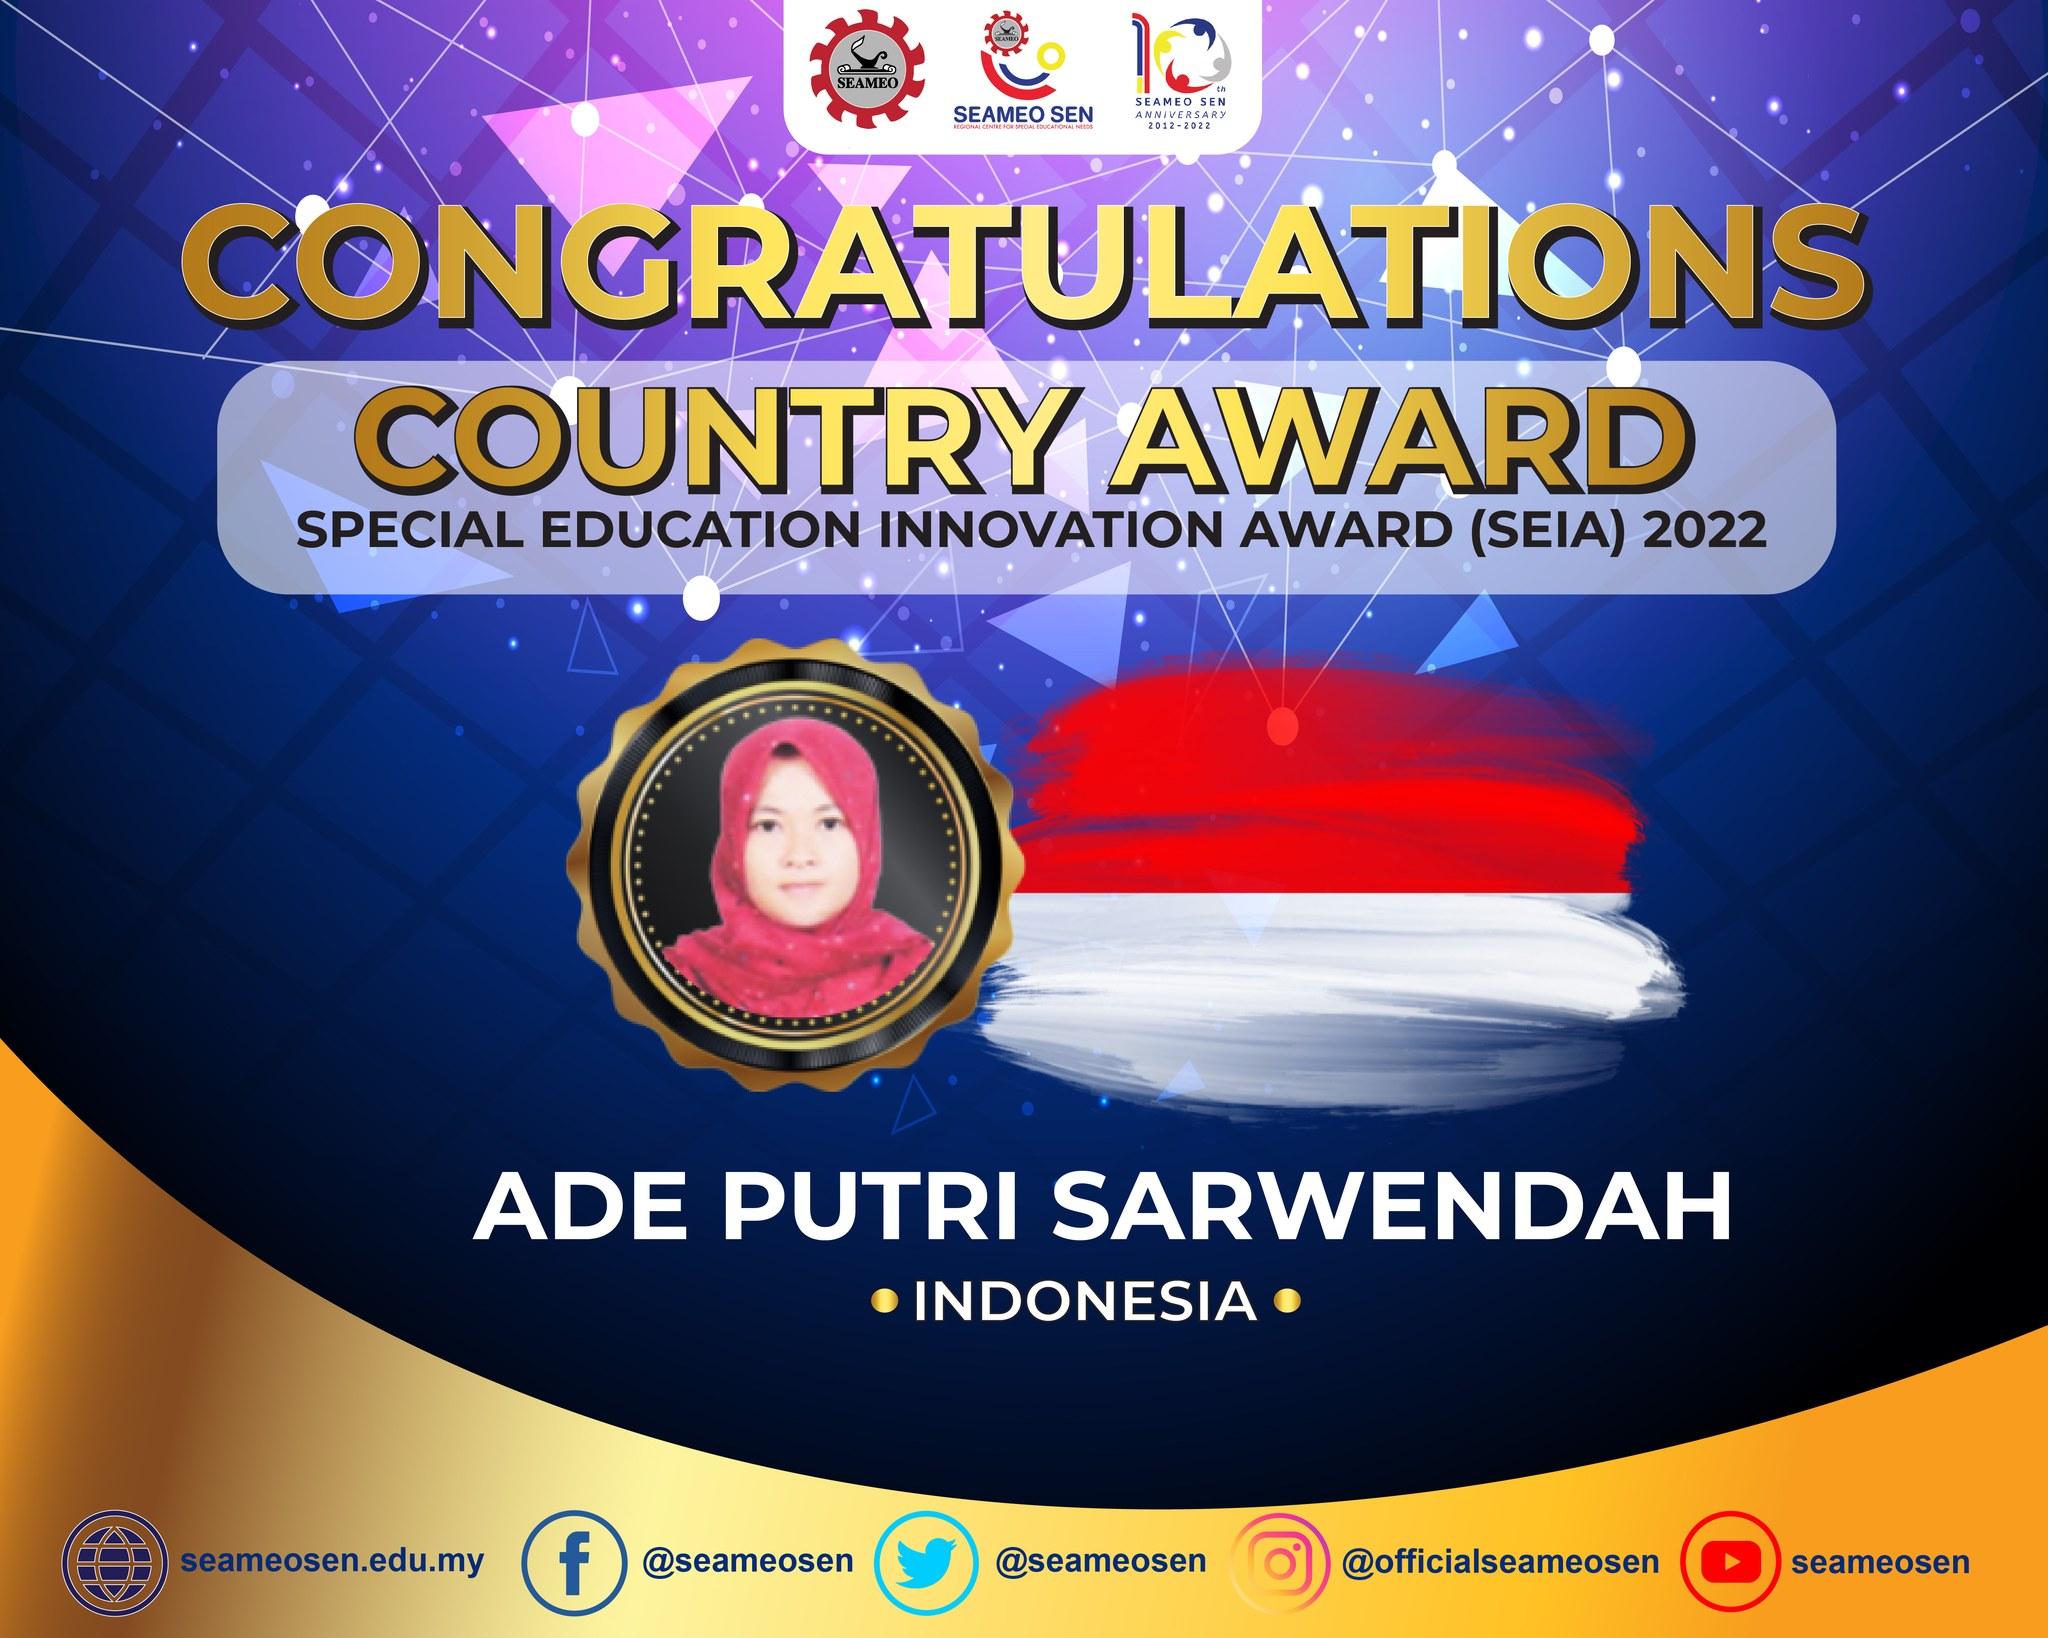 Country Award for Indonesia is Mdm. Ade Putri Sarwendah